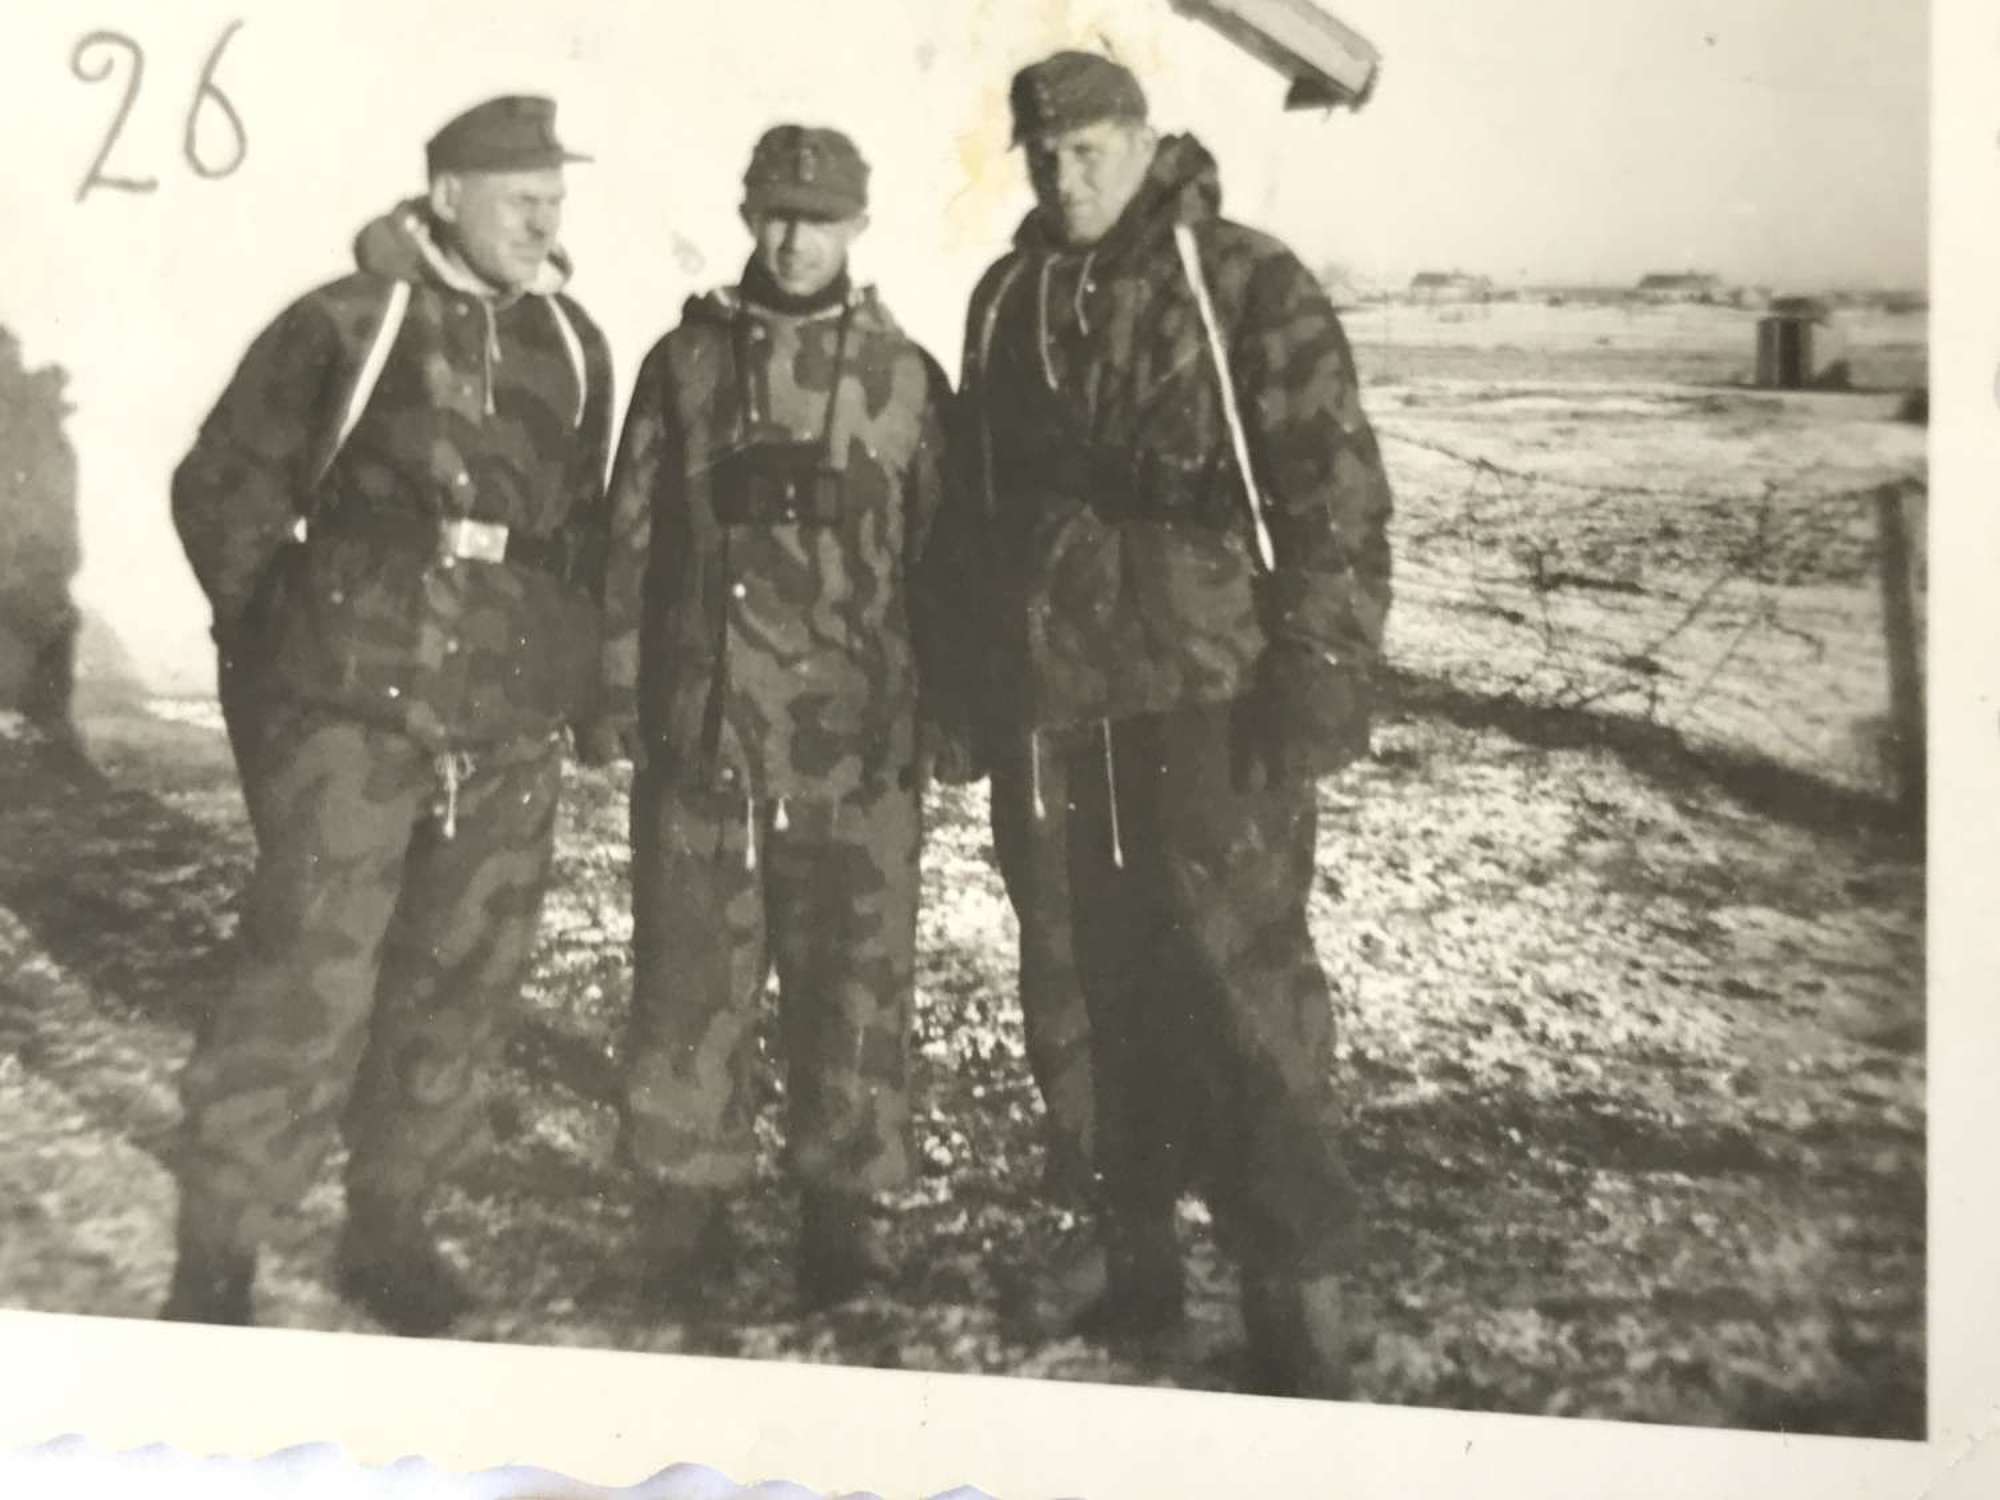 Three photographs of Germans in winter camo uniforms 1944